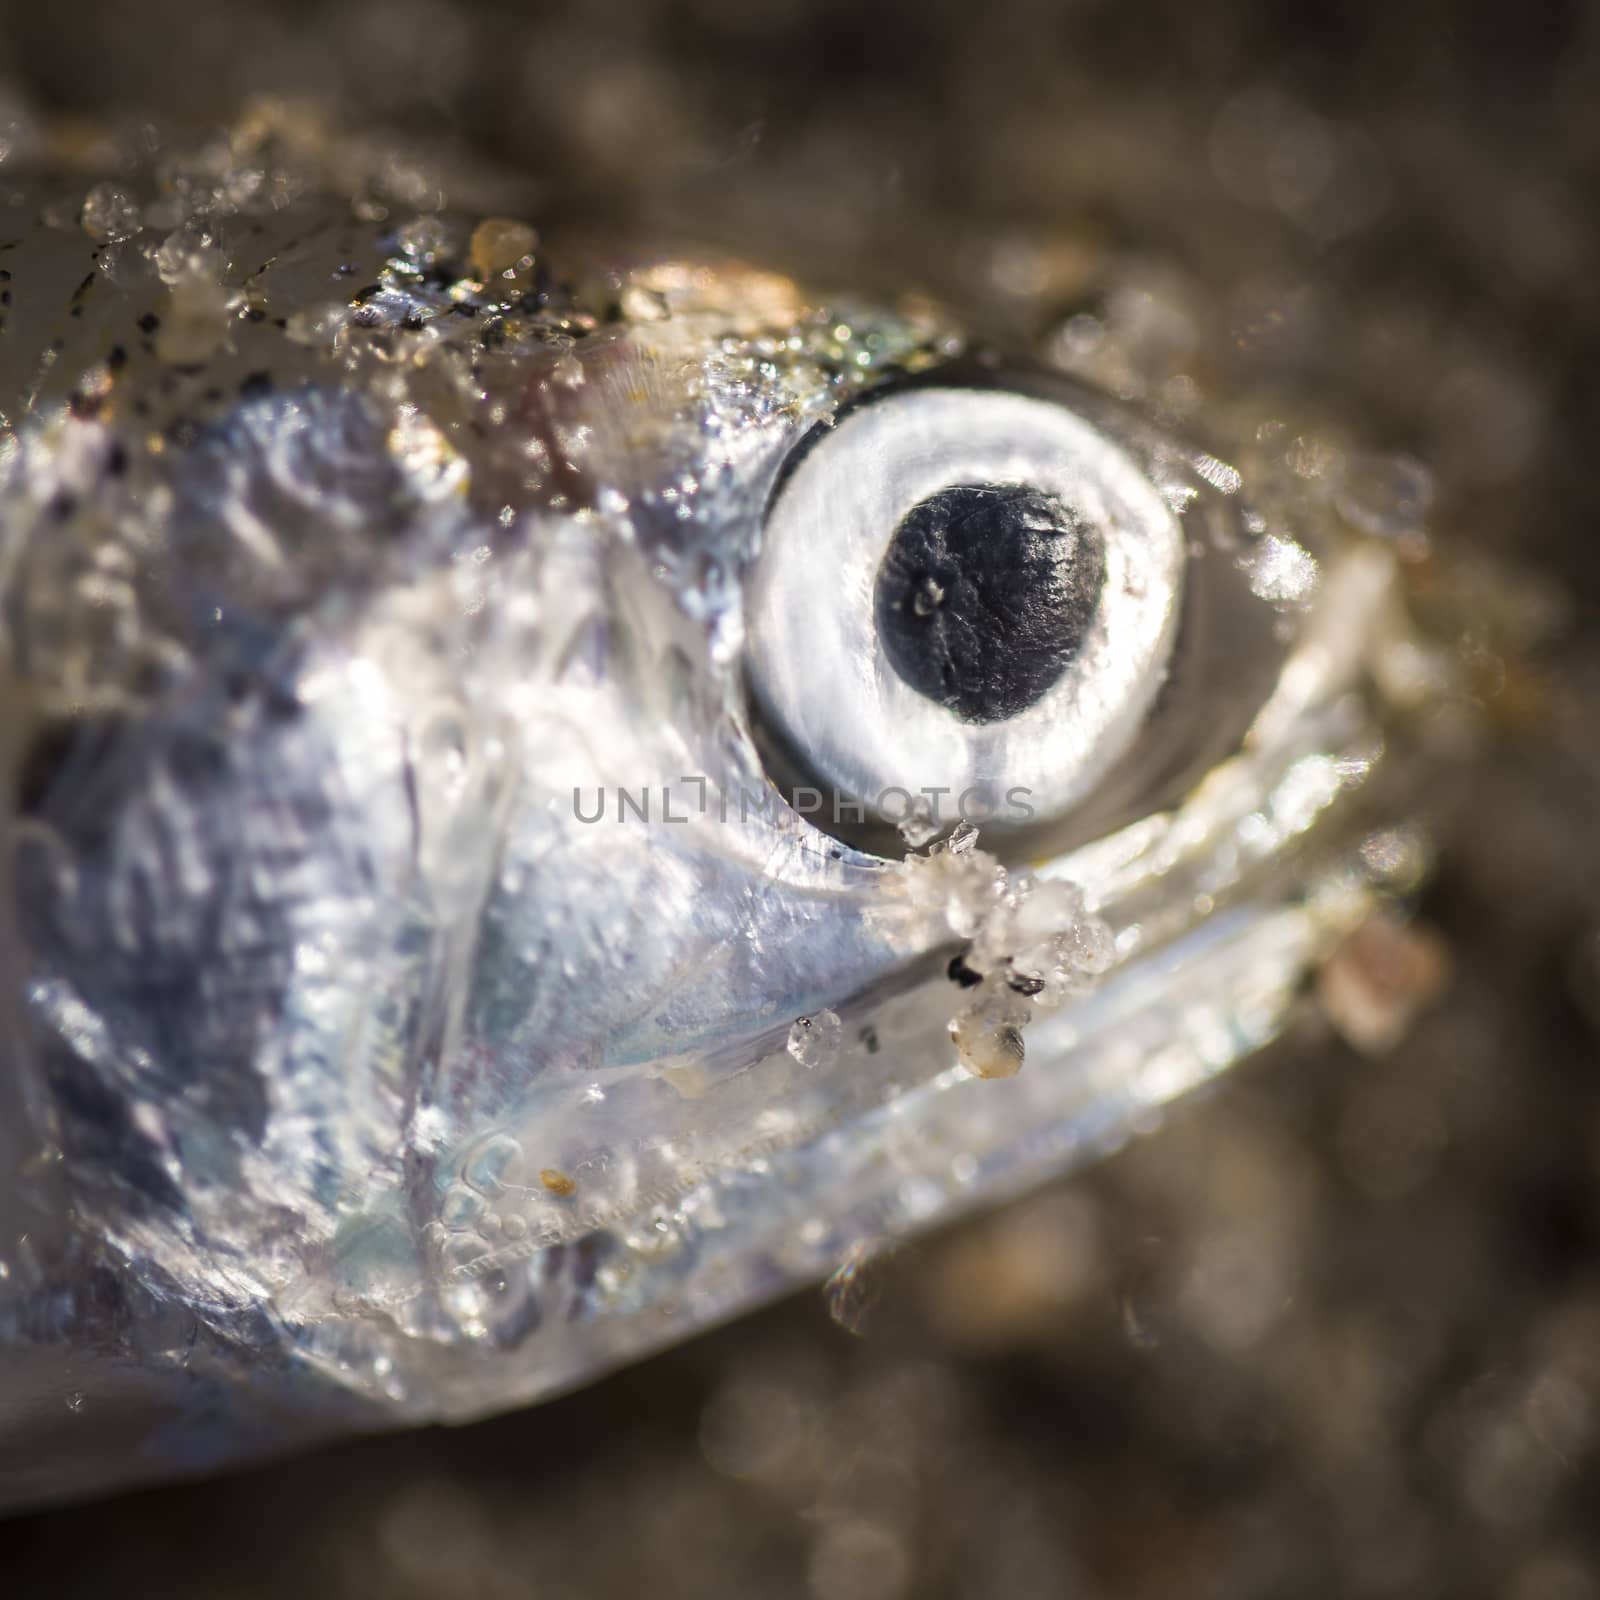 Macro photograph of a dead fish